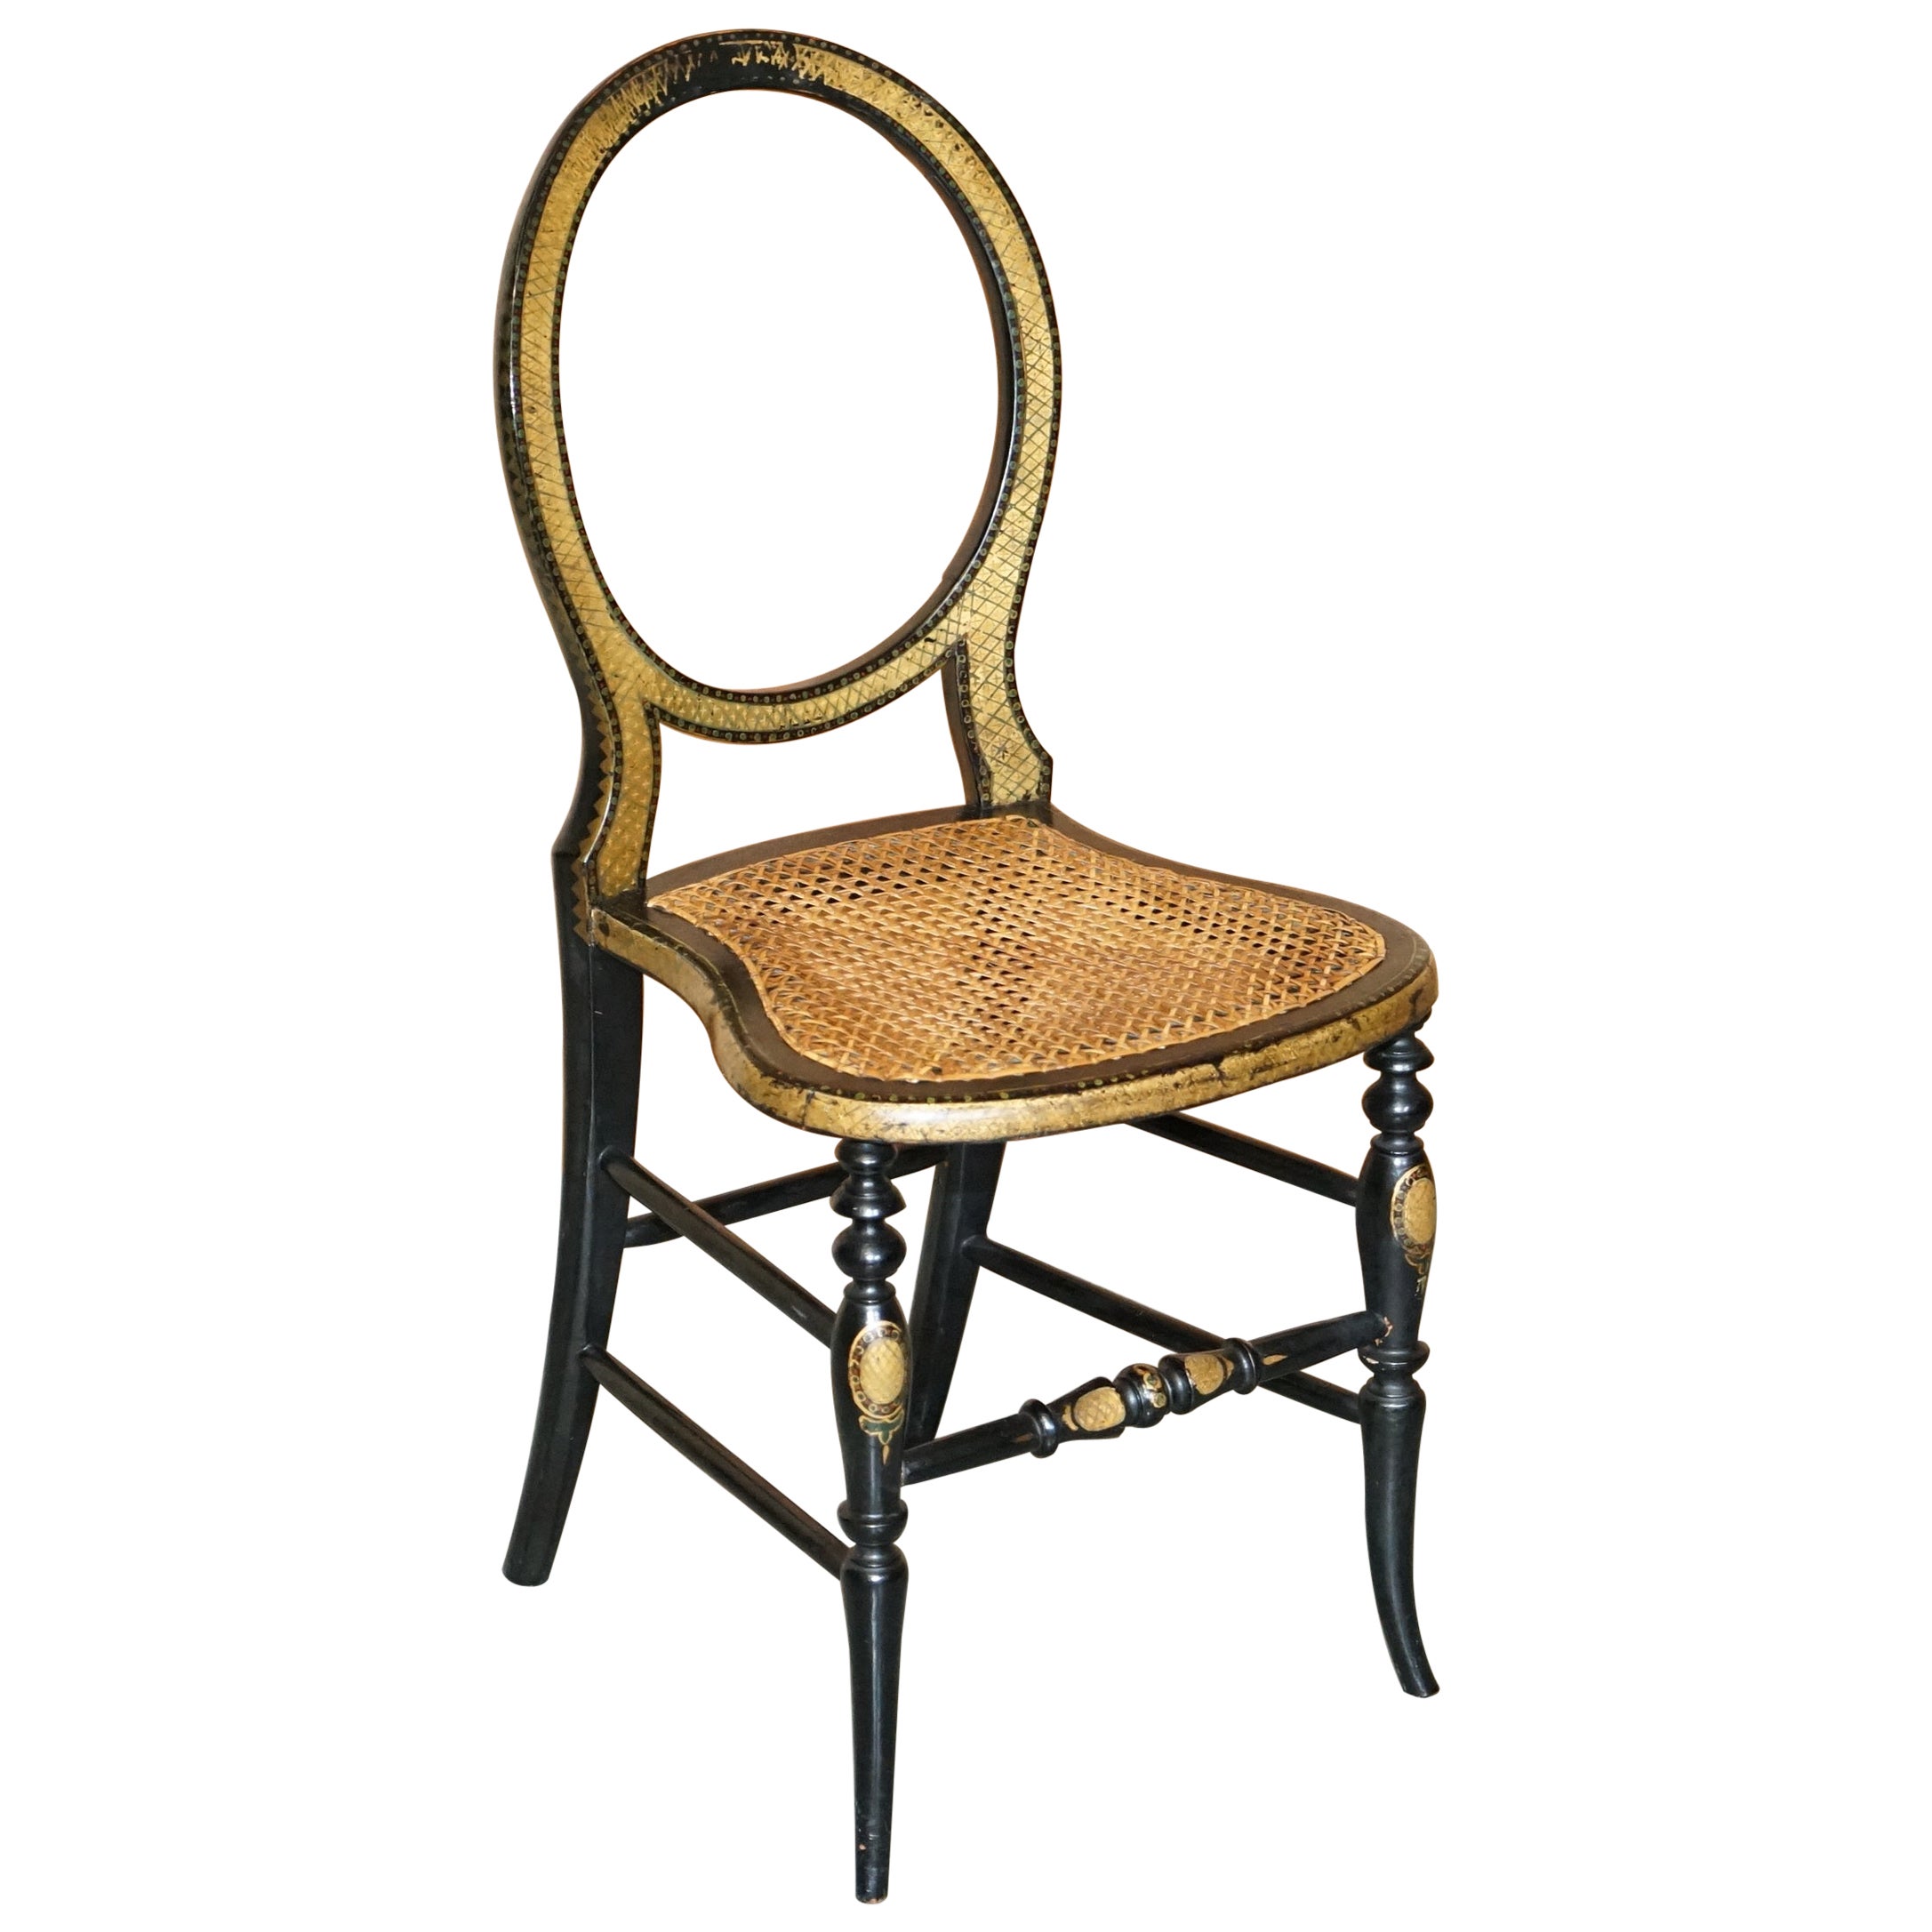 Stamped Circa 1815 Jennens & Bettridge Ebonsied Gold Leaf Painted Regency Chair